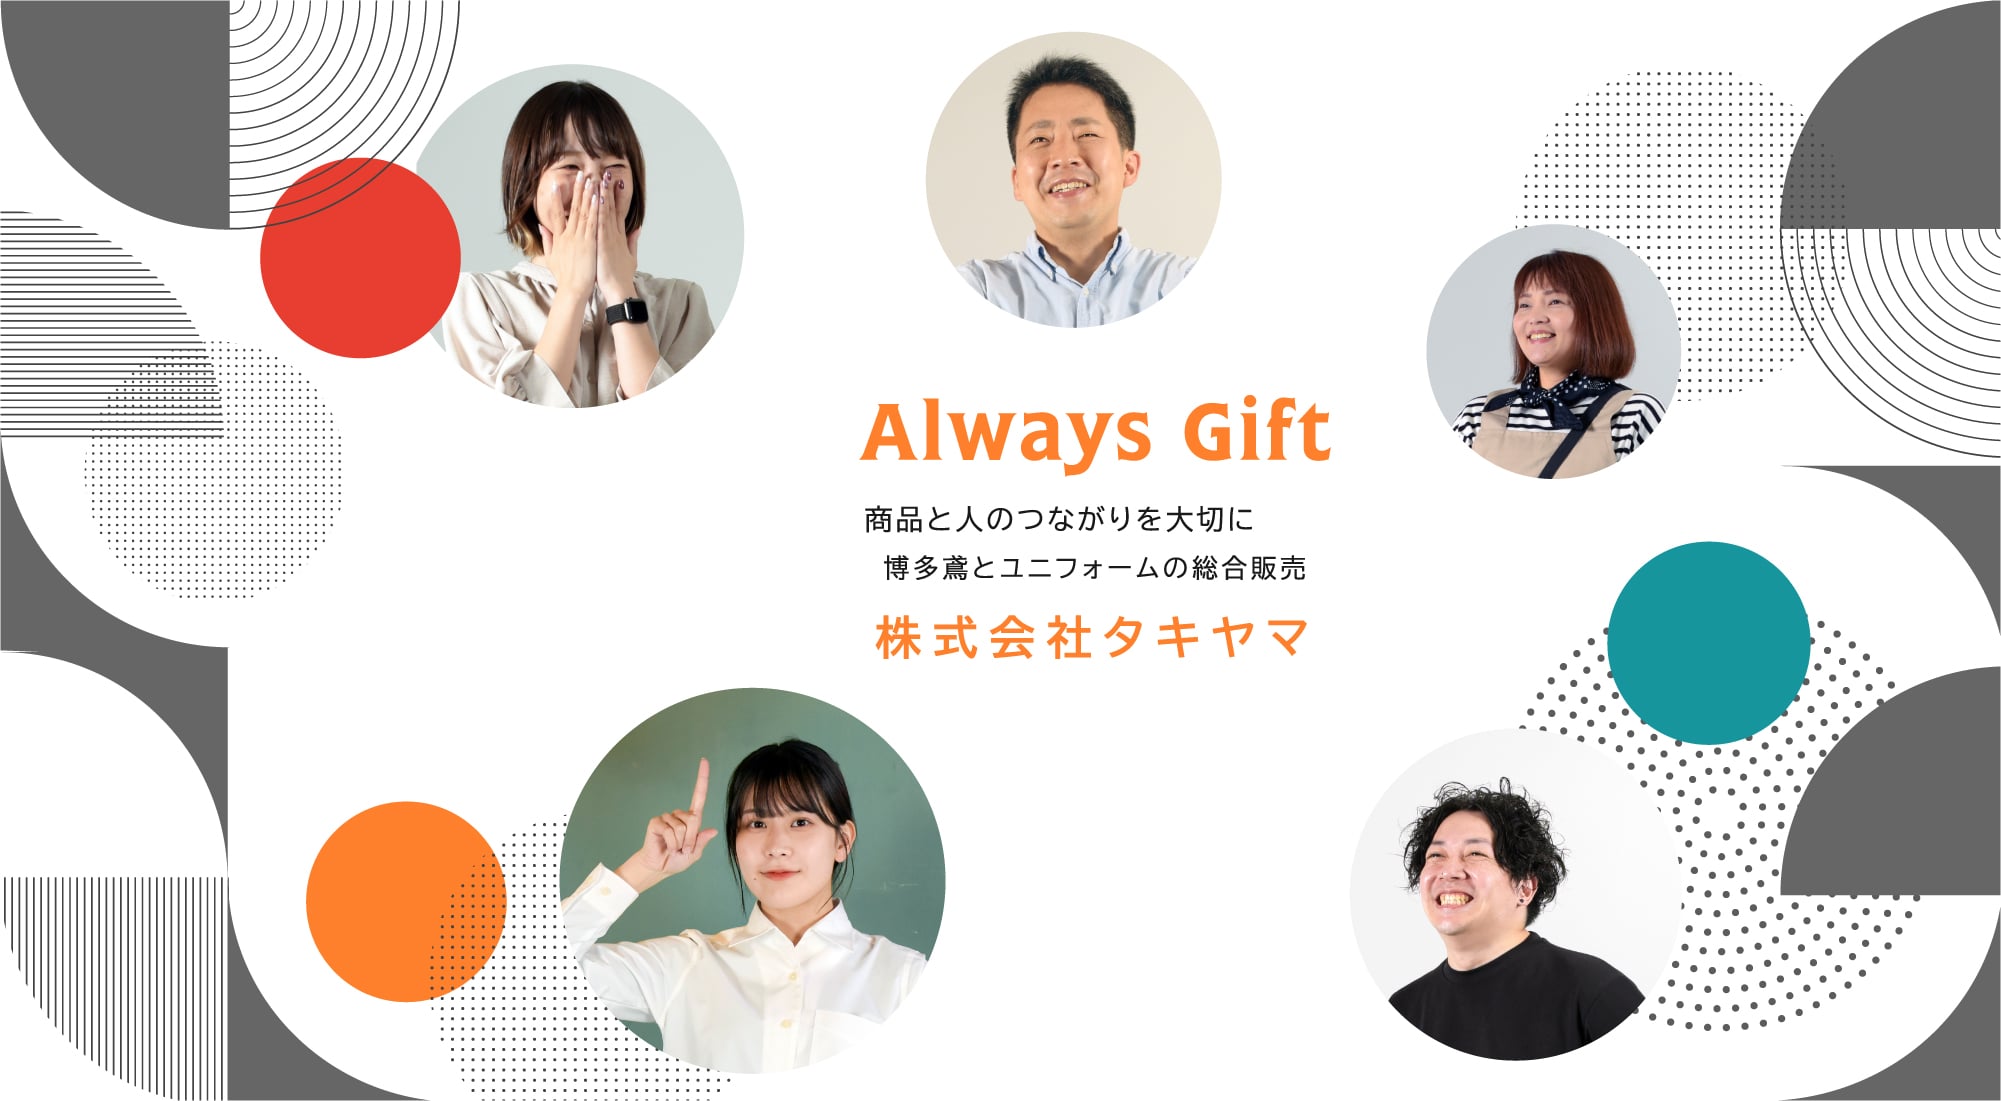 Always Gift 商品と人のつながりを大切に 博多鳶とユニフォームの総合販売 株式会社タキヤマ